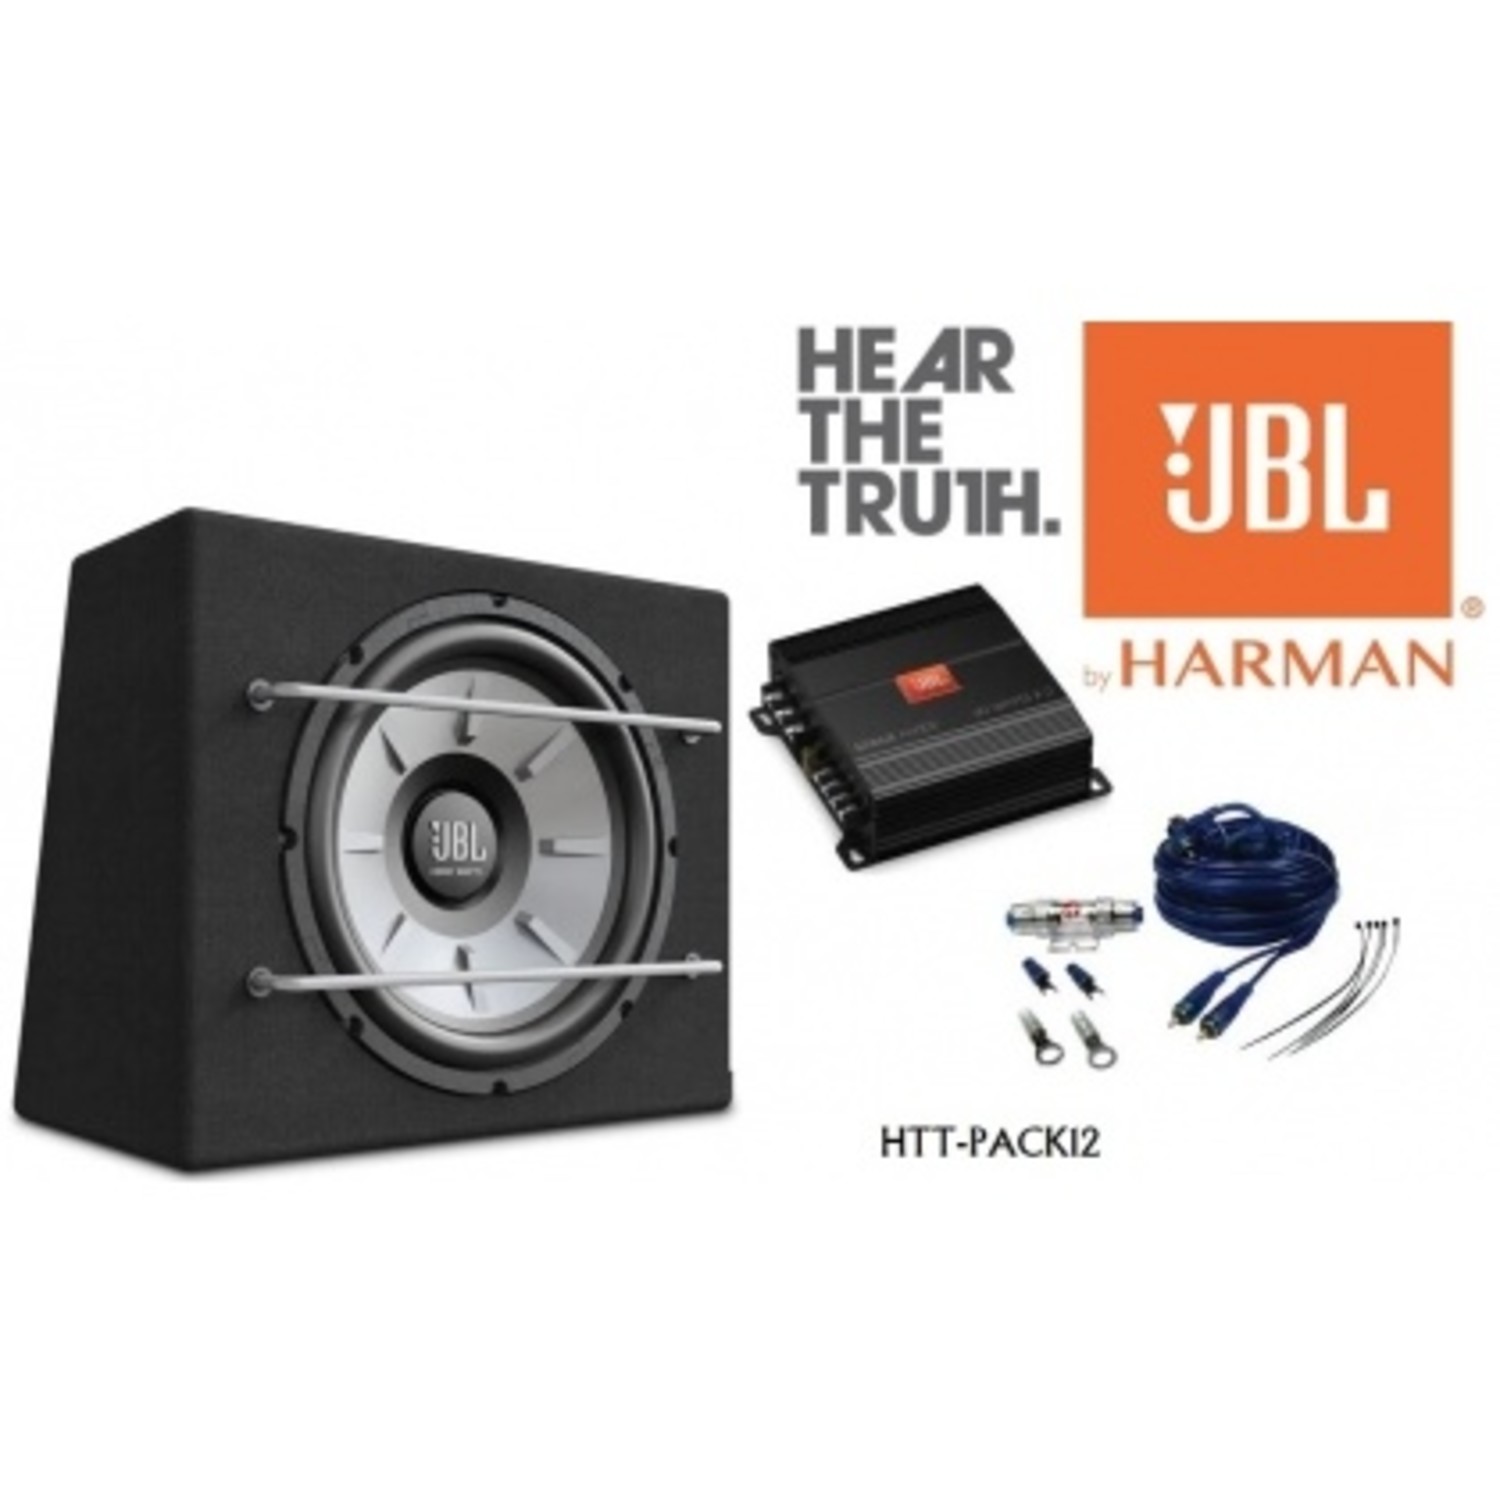 afstuderen Individualiteit Grillig JBL HTT-Pack 12 | Complete Sub audio set 1000 watt| VenderParts.nl -  VenderParts.nl